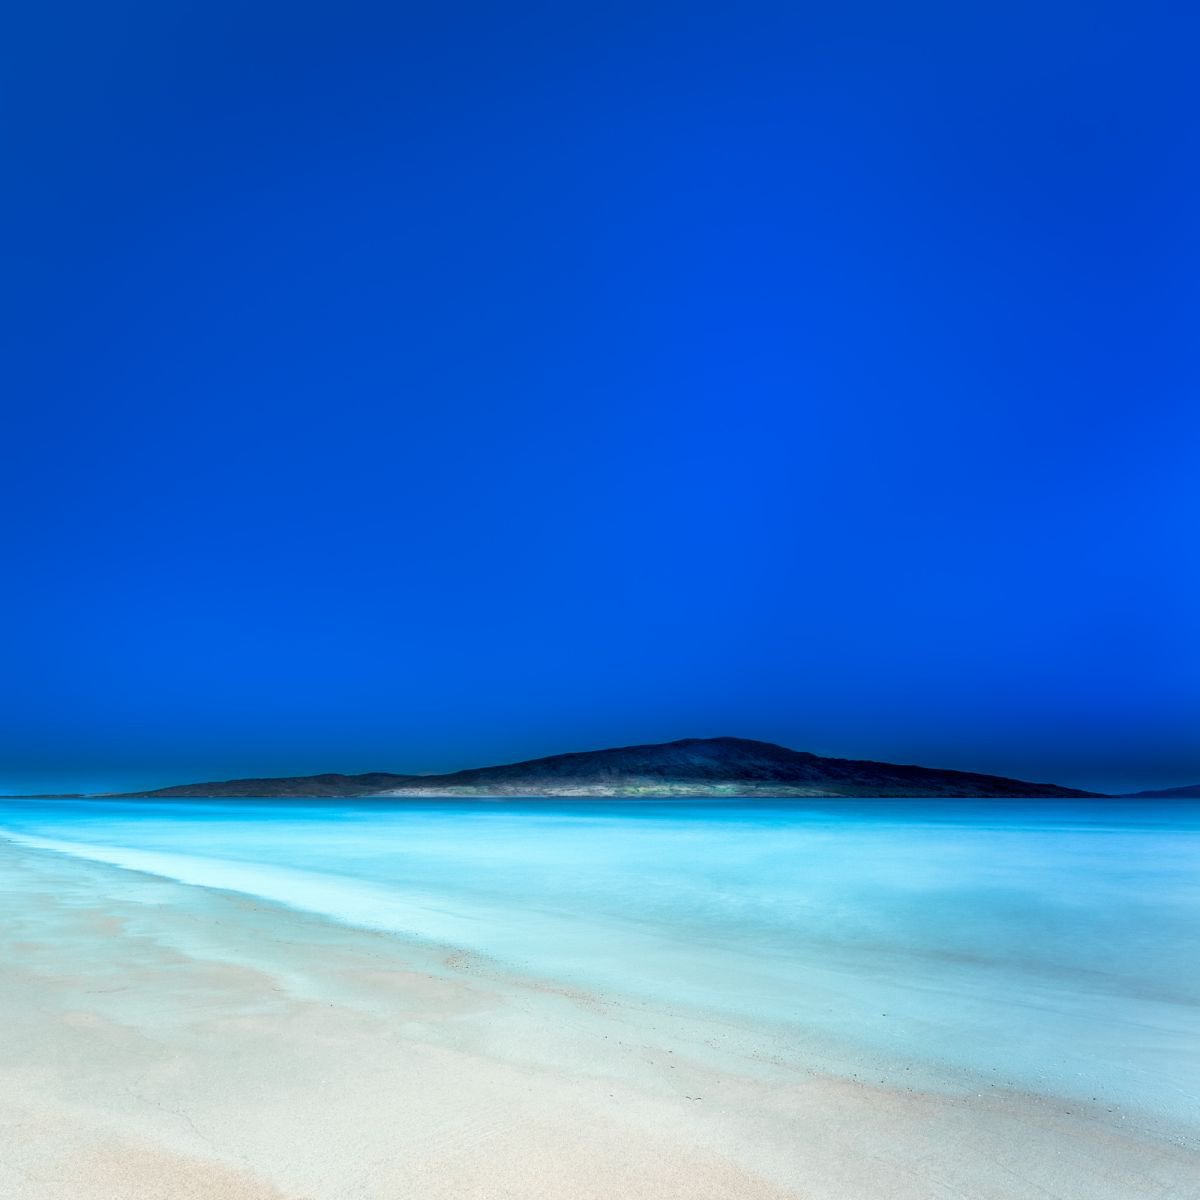 Midnight Sands, Luskentyre - Minimalist deserted beach canvas by Lynne Douglas